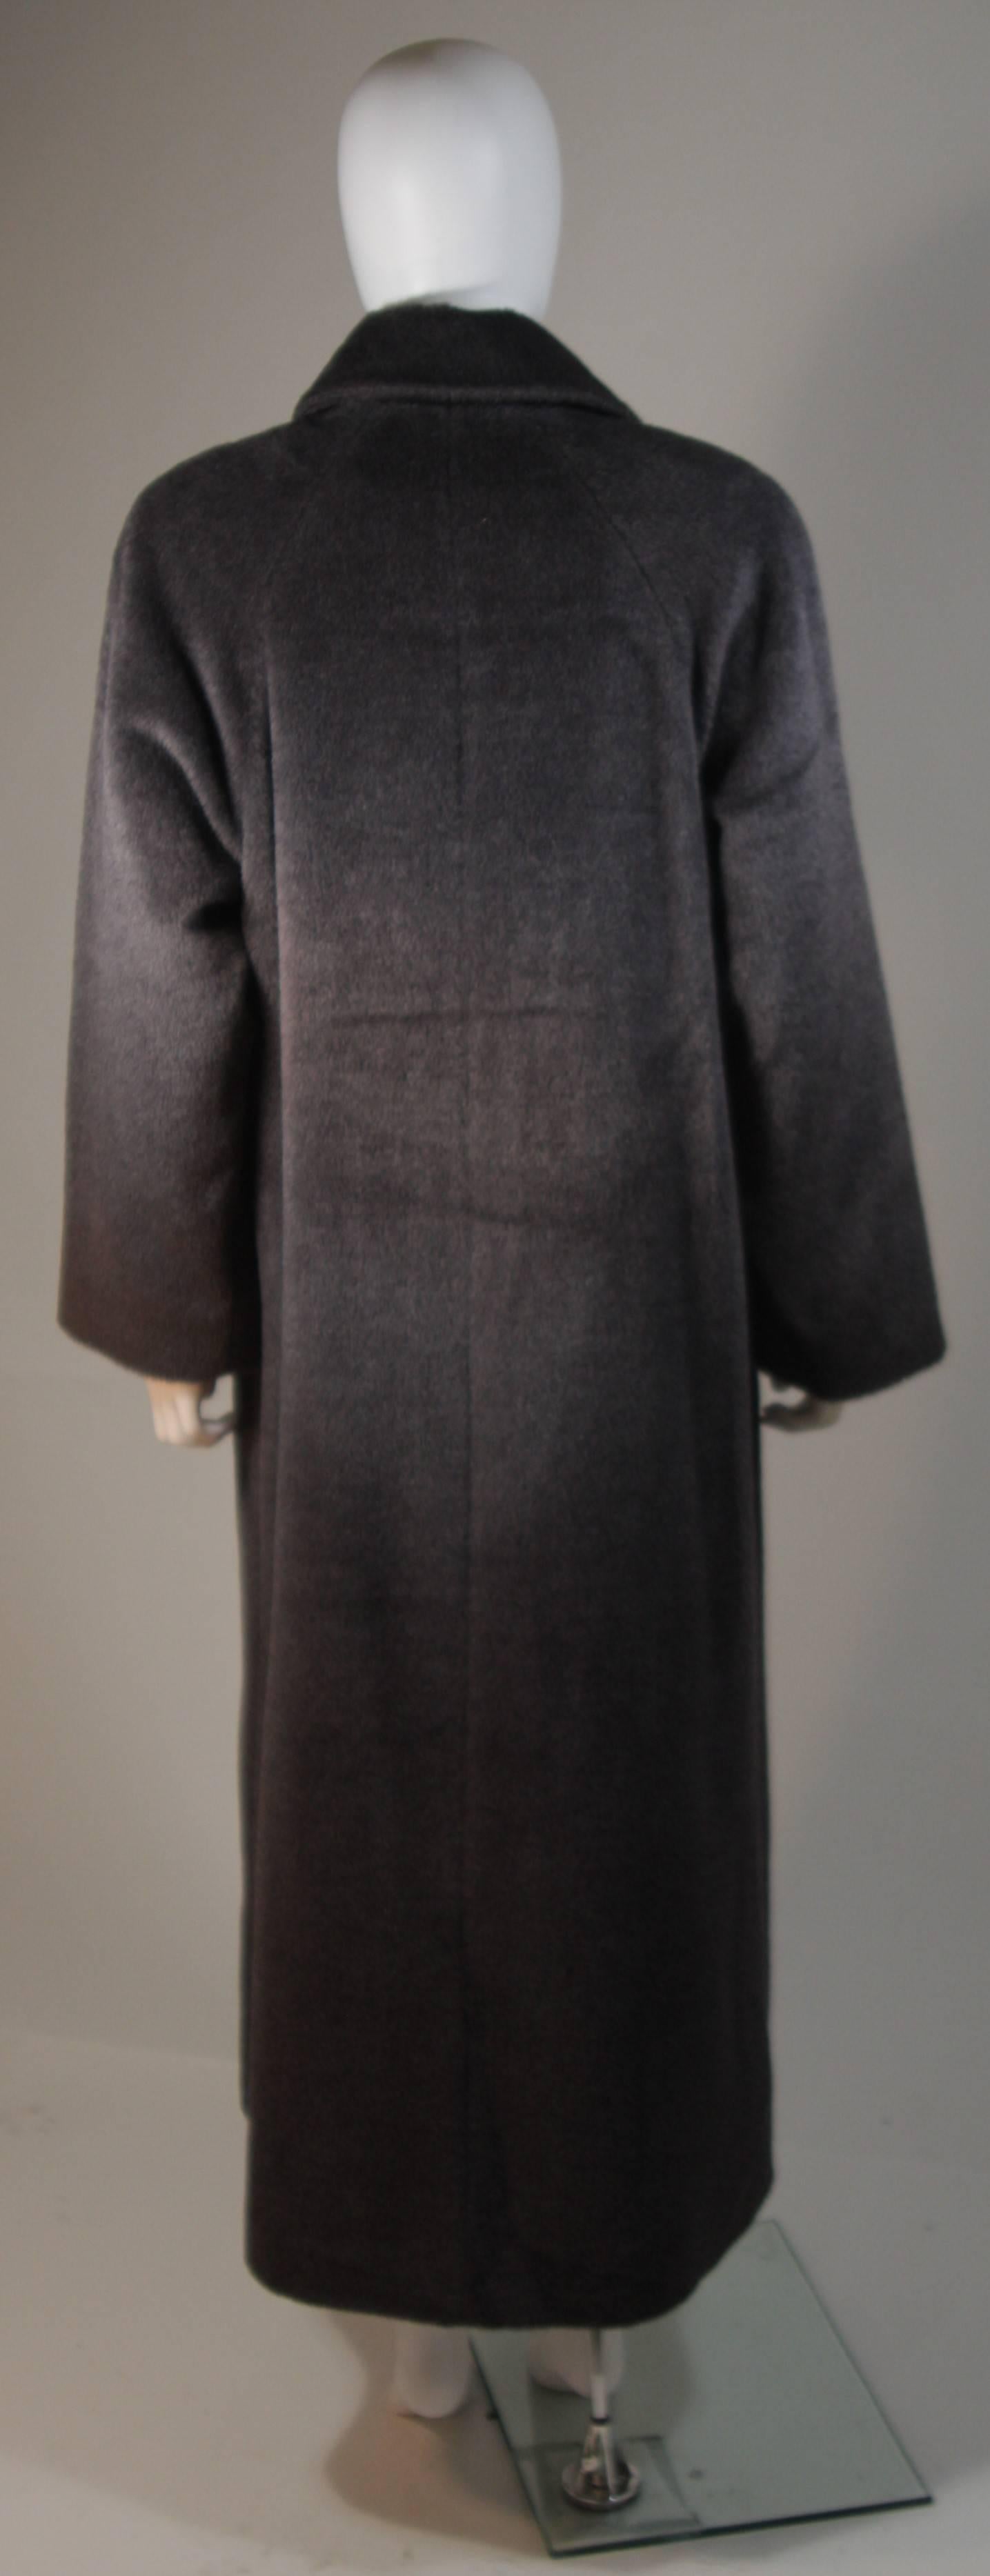 MALLIA PIACENZA Grey Baby Llama Coat with Fox Fur Tassels Size 8 1